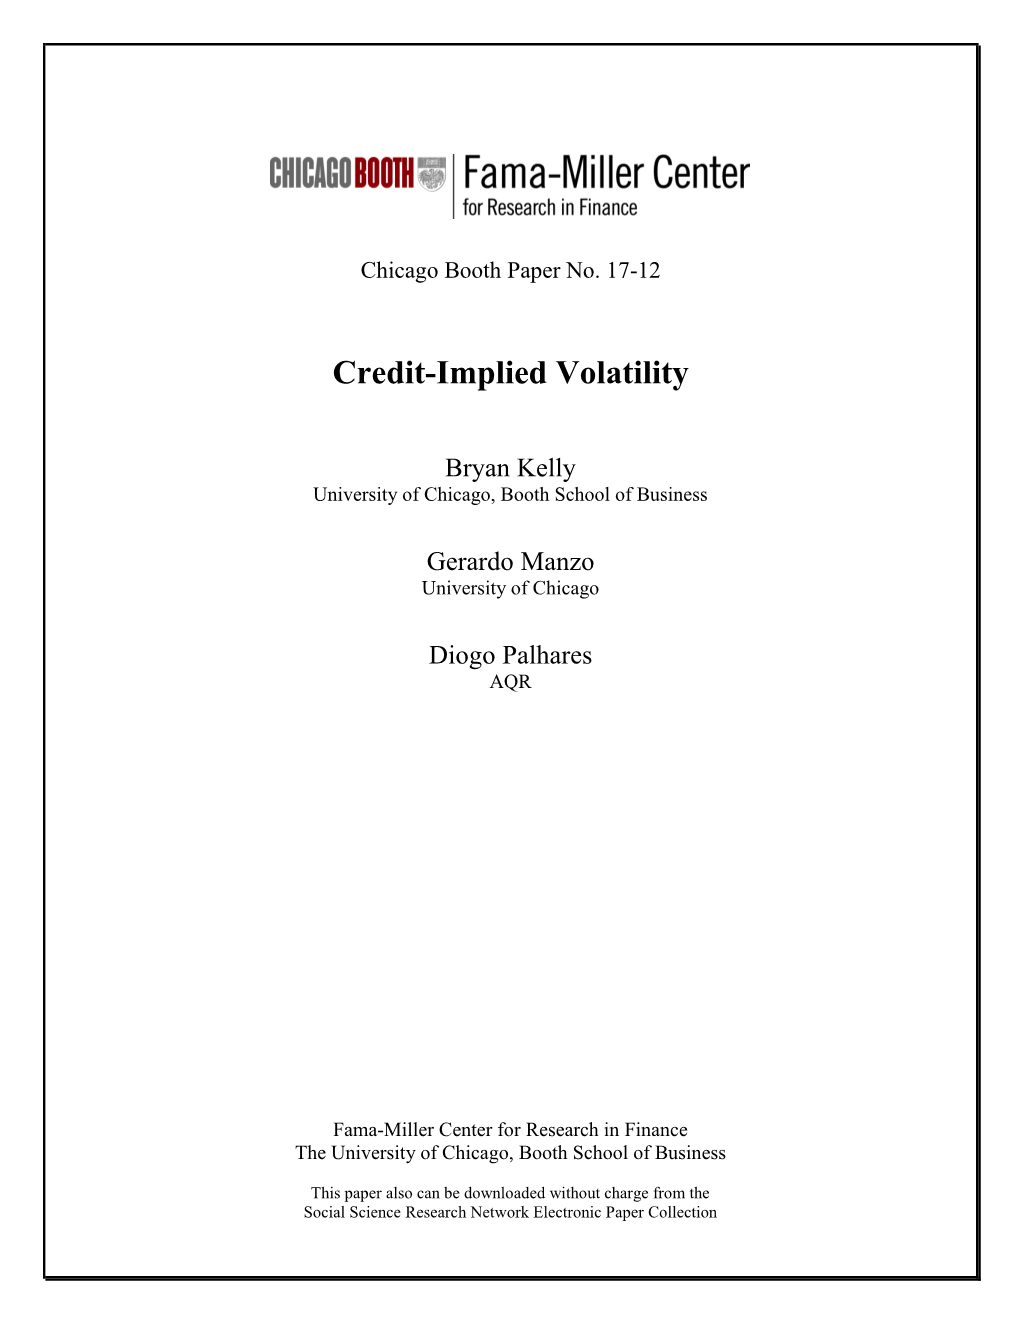 Credit-Implied Volatility